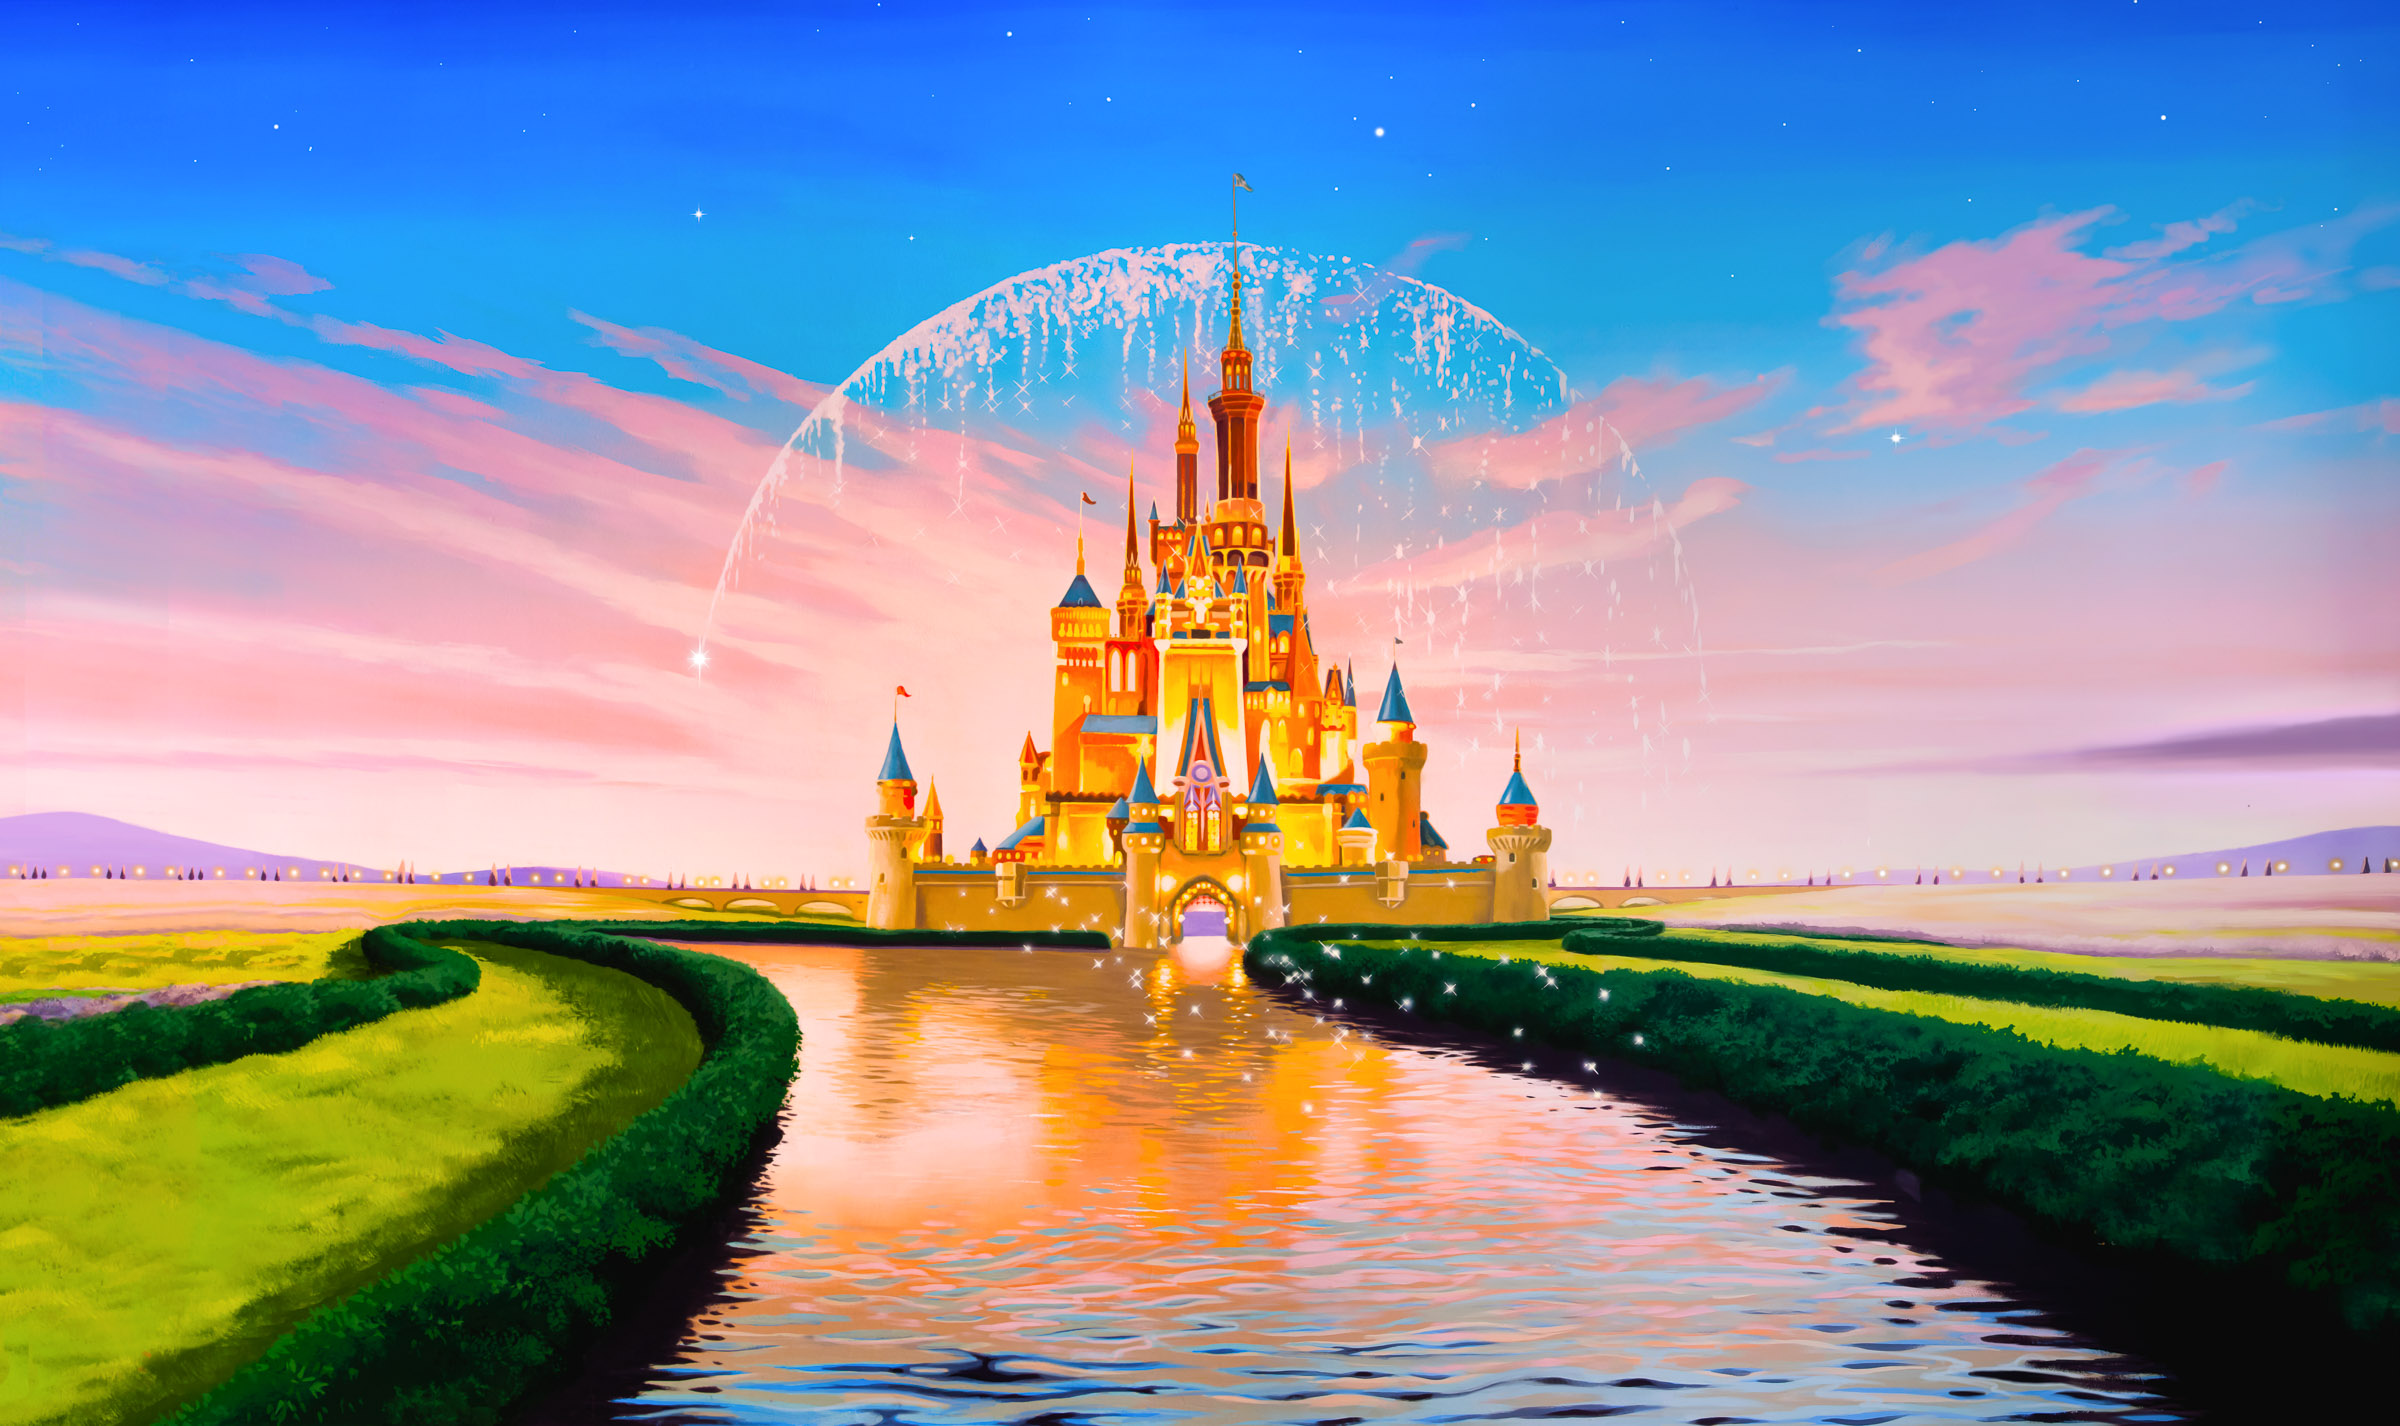 Children's Murals favourite iconic Disney castle